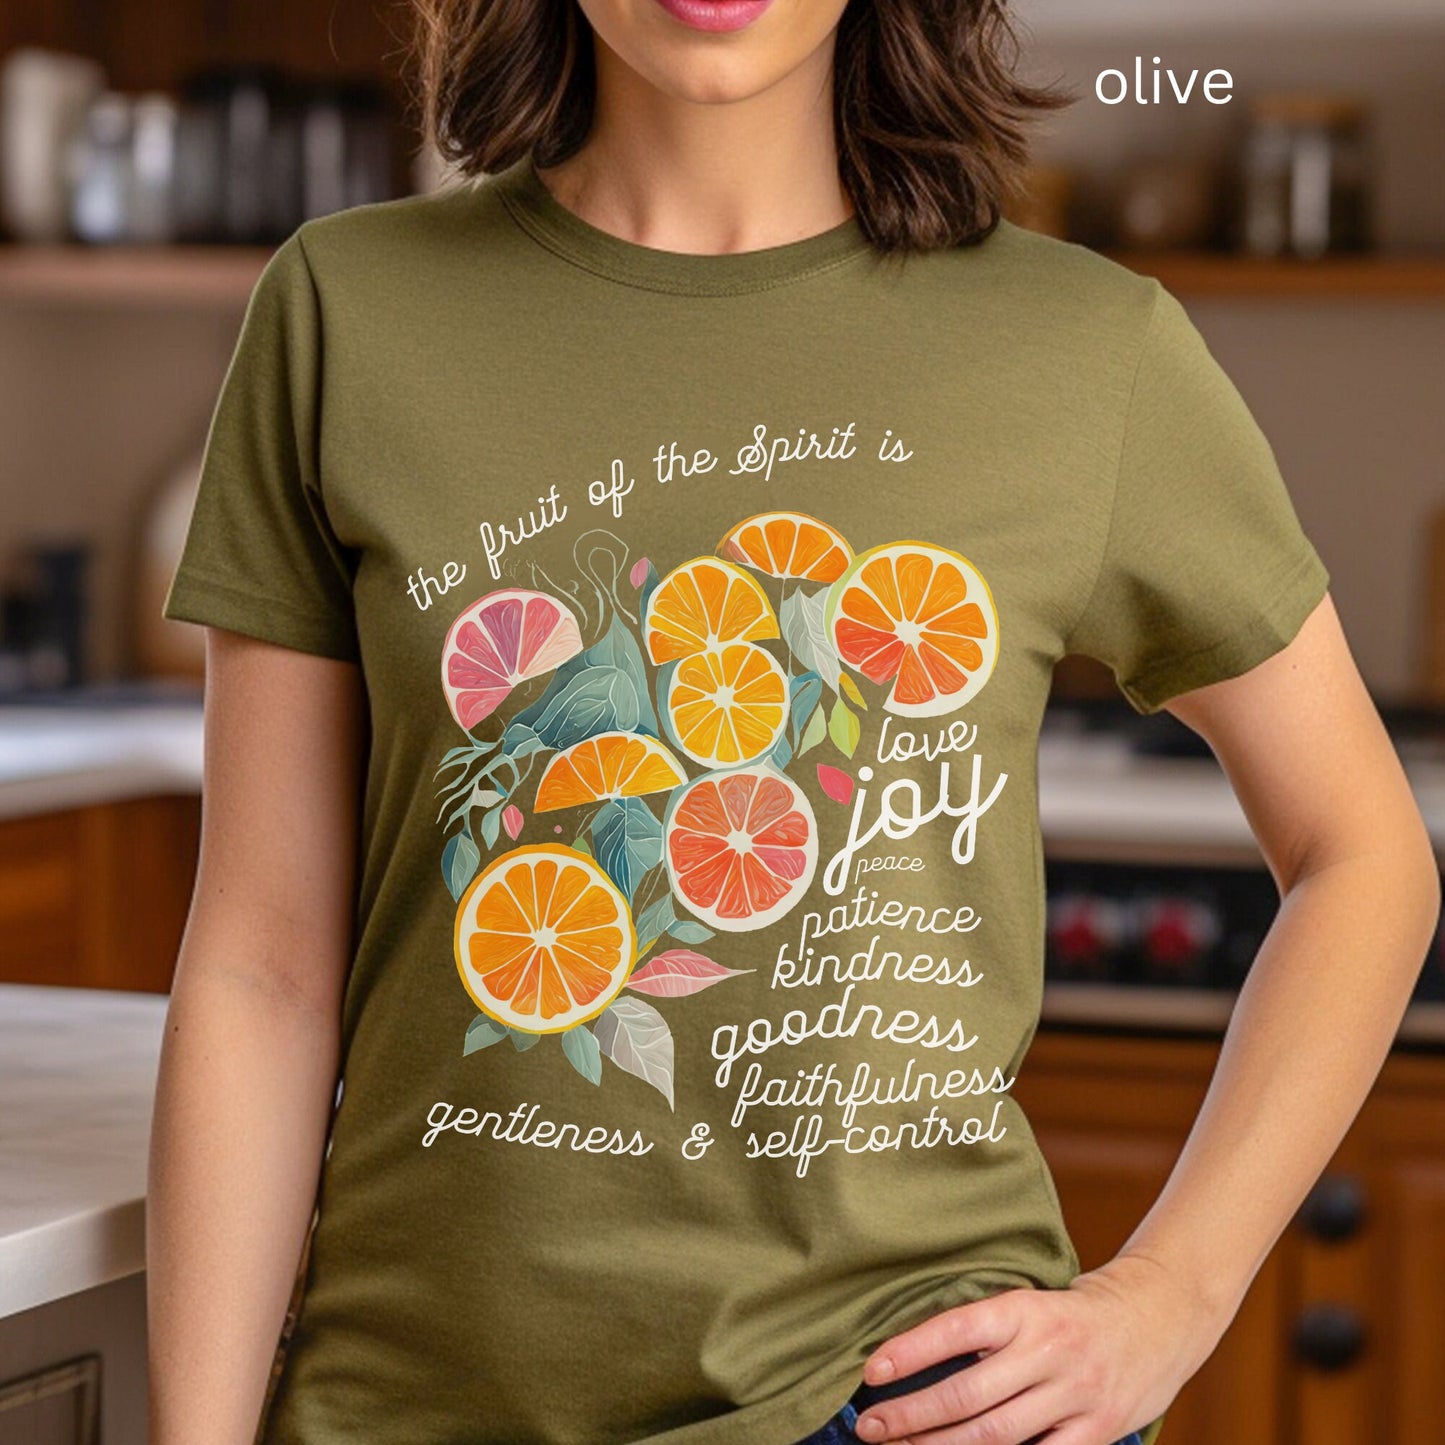 Fruit of the Spirit shirt | Christian fruits of the Spirit shirt | Scripture Shirt | Gift for Her | Cool and Comfy Bible T-Shirt |